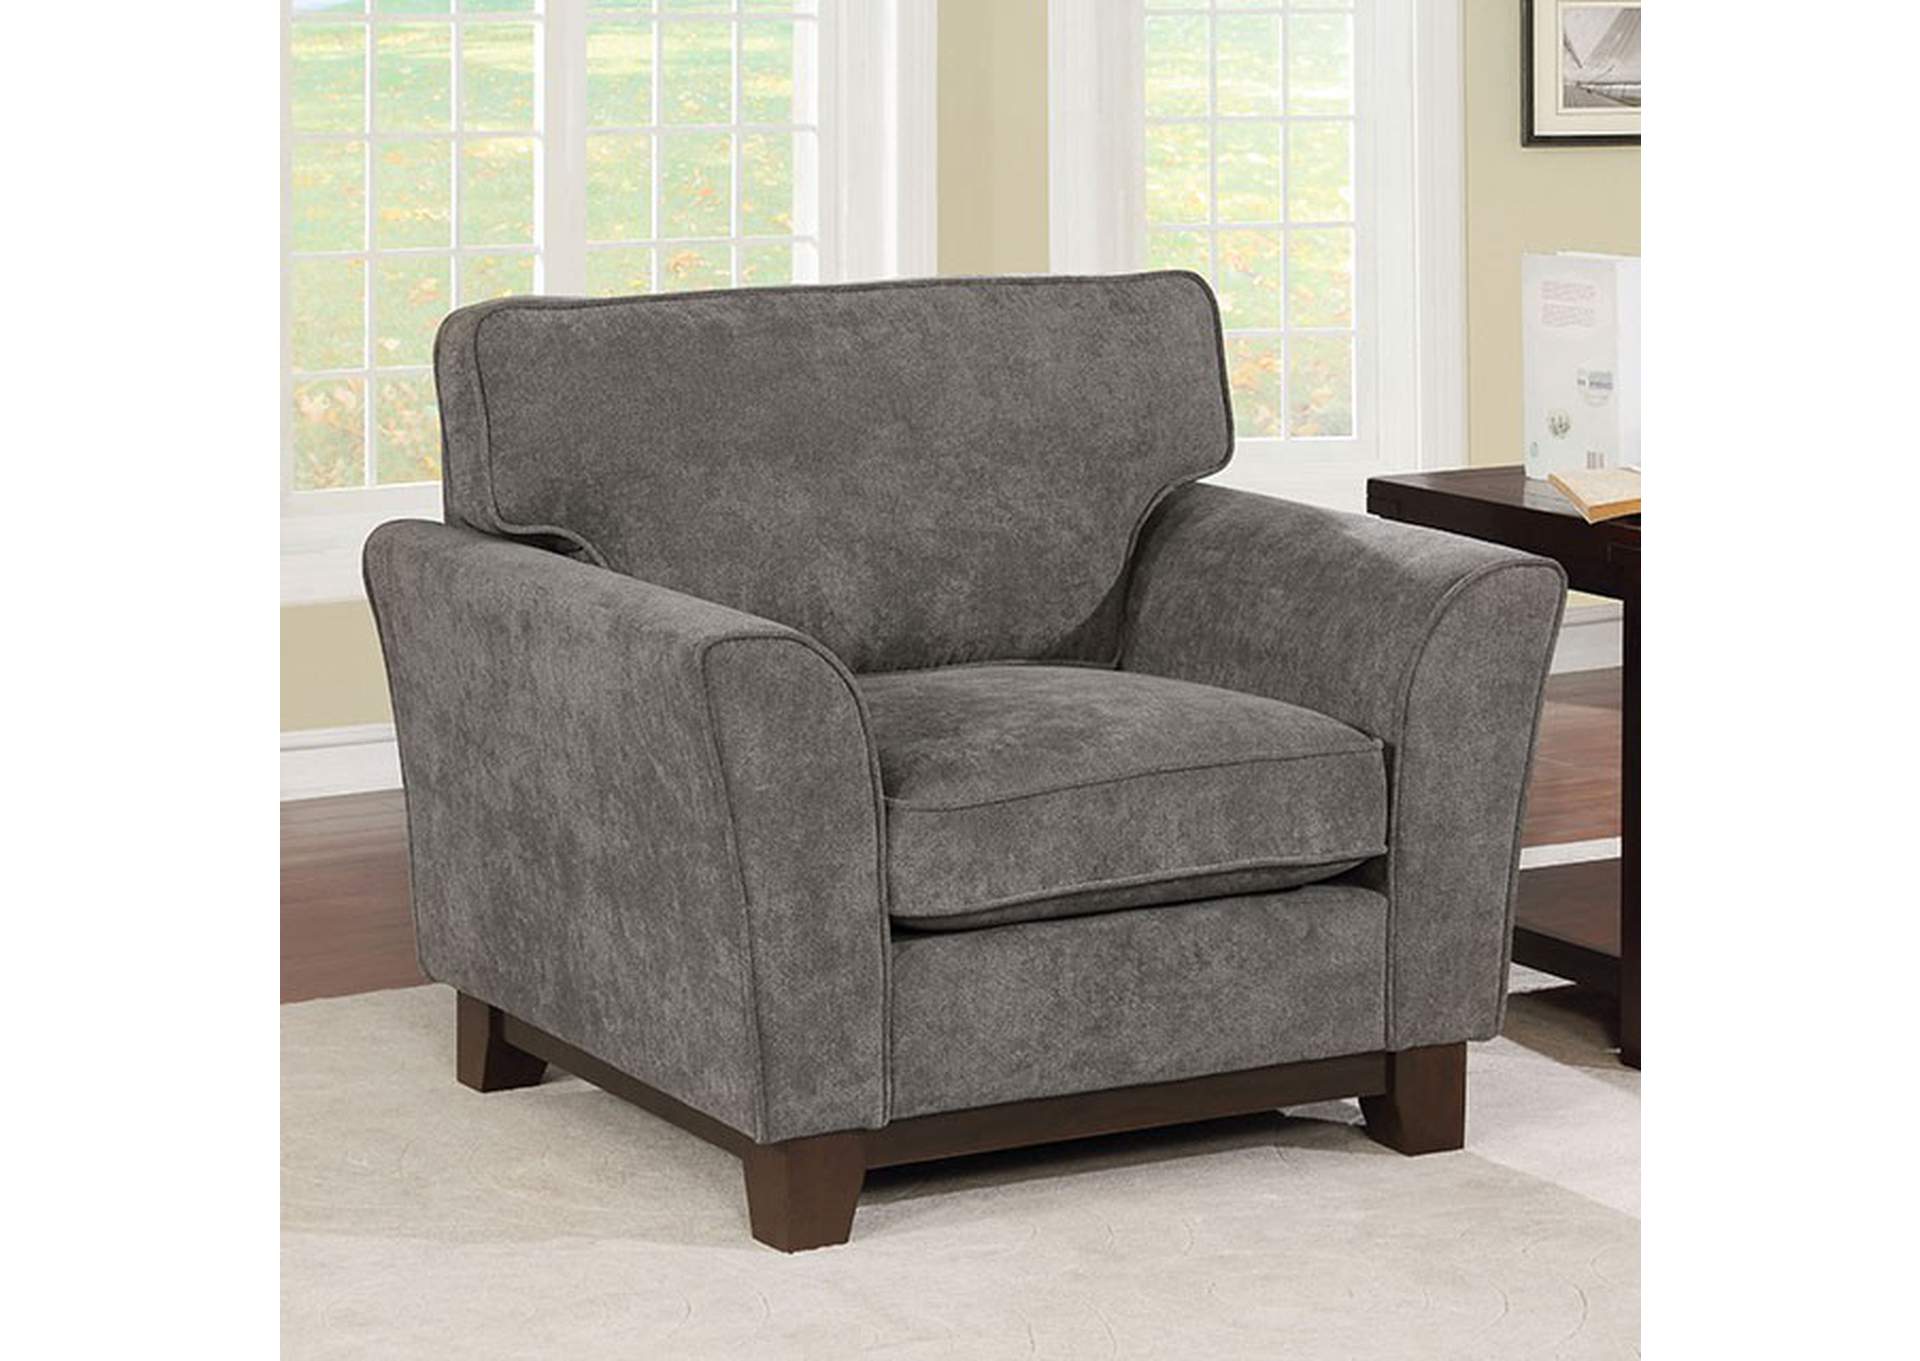 Caldicot Chair,Furniture of America